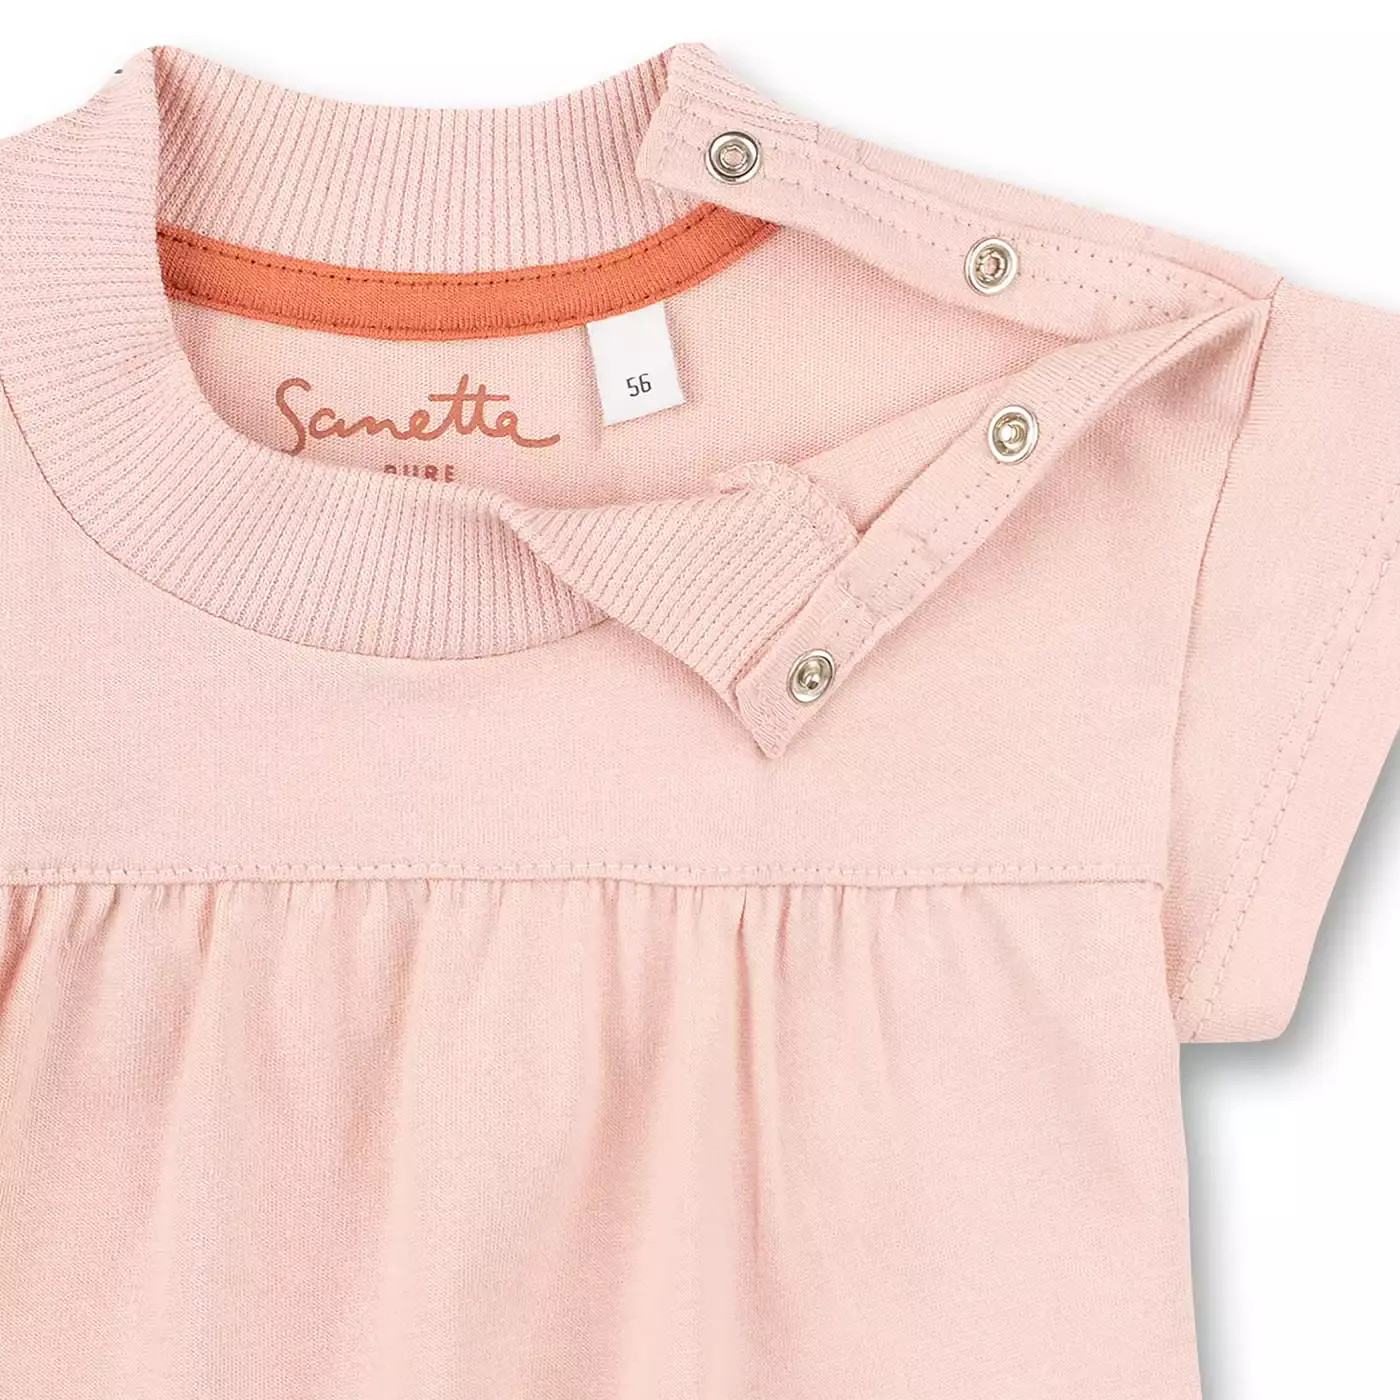 T-Shirt Pure Sanetta Pink Rosa 2005579870007 4